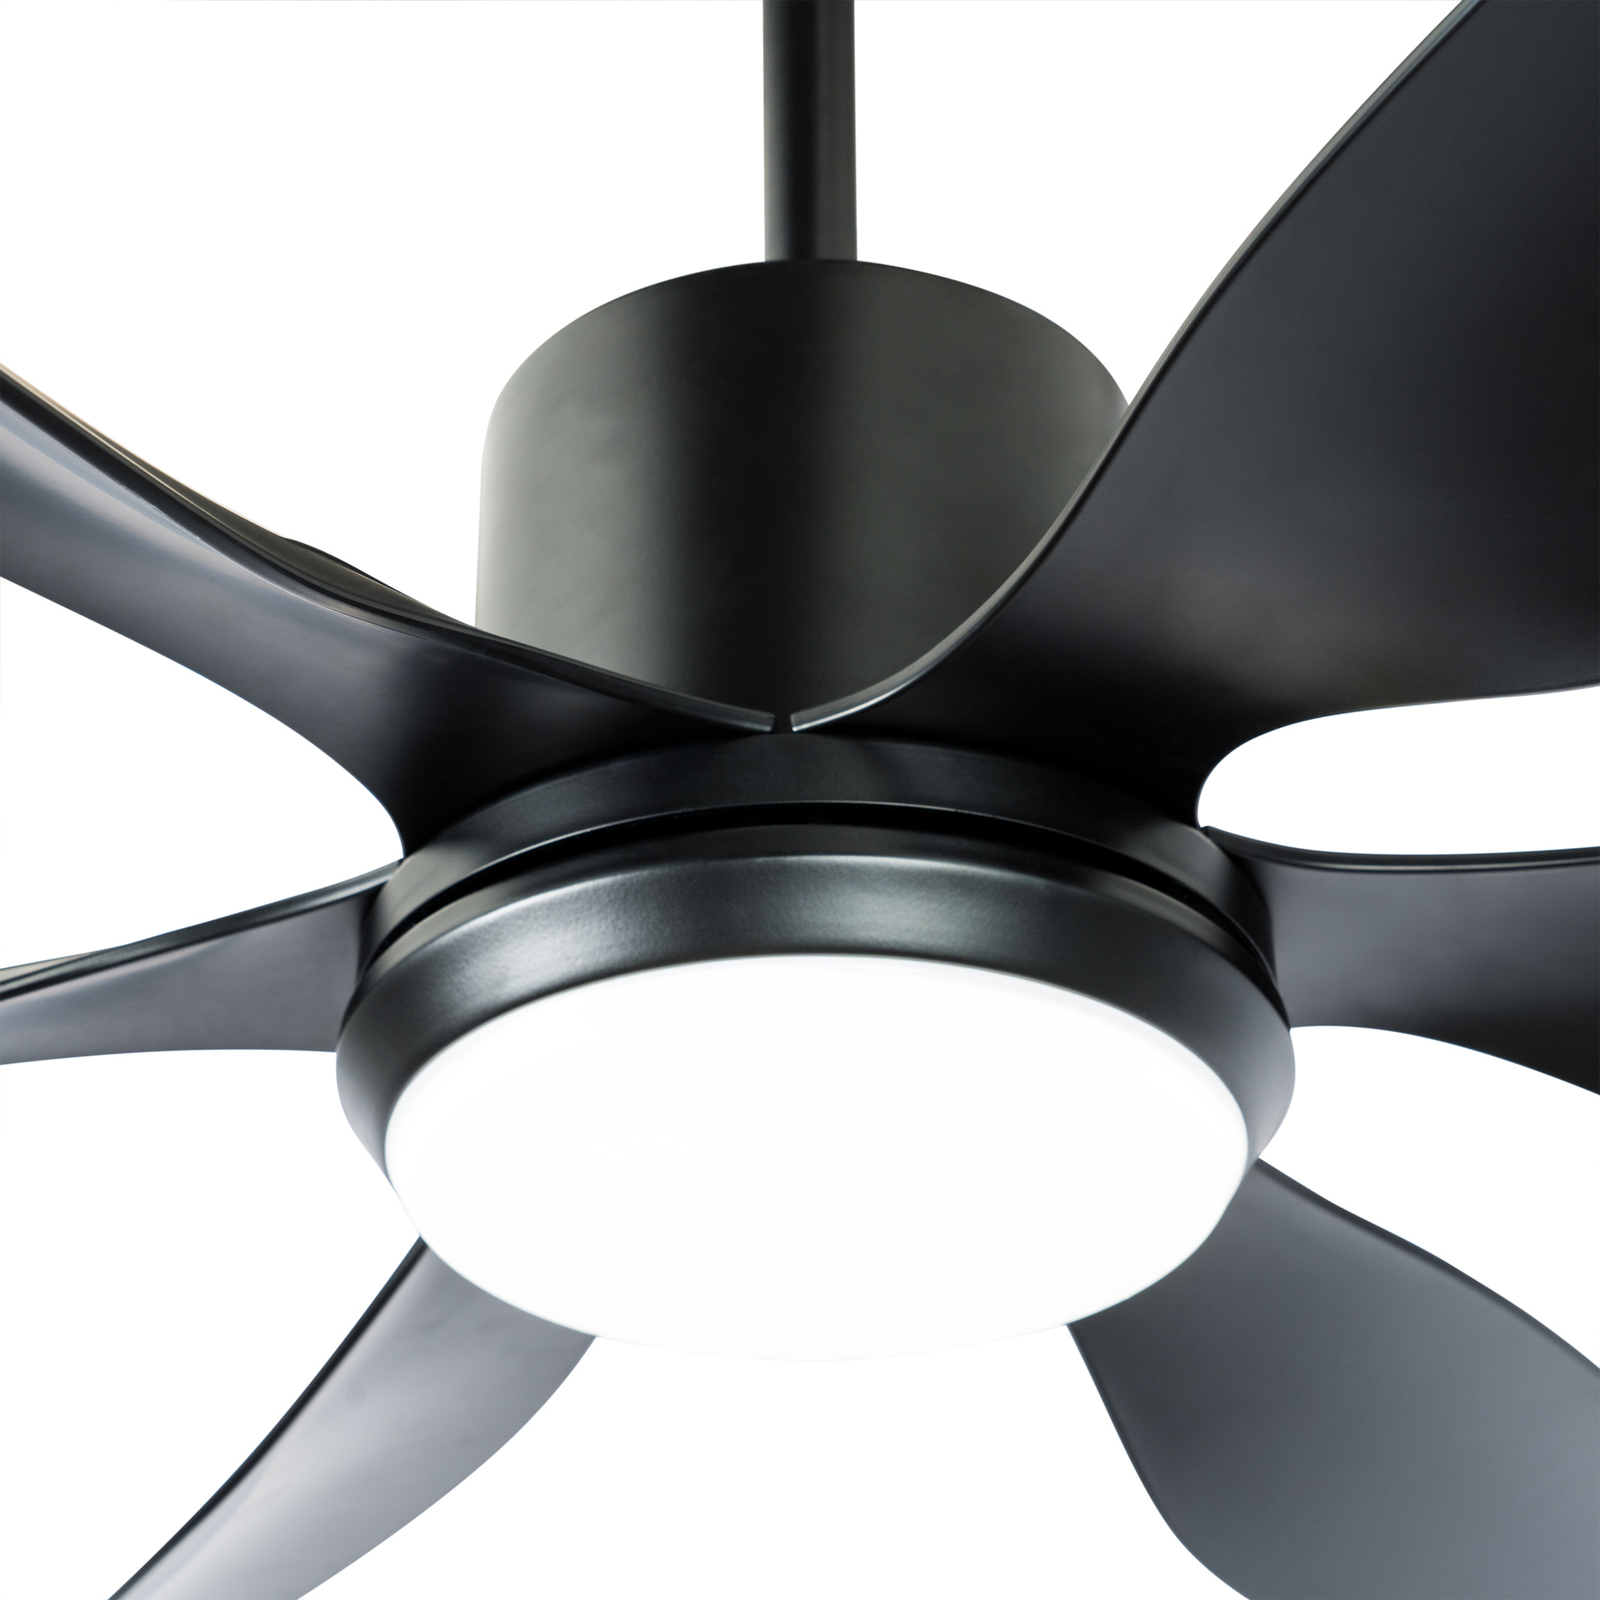 Starluna Taravino LED ceiling fan with CCT